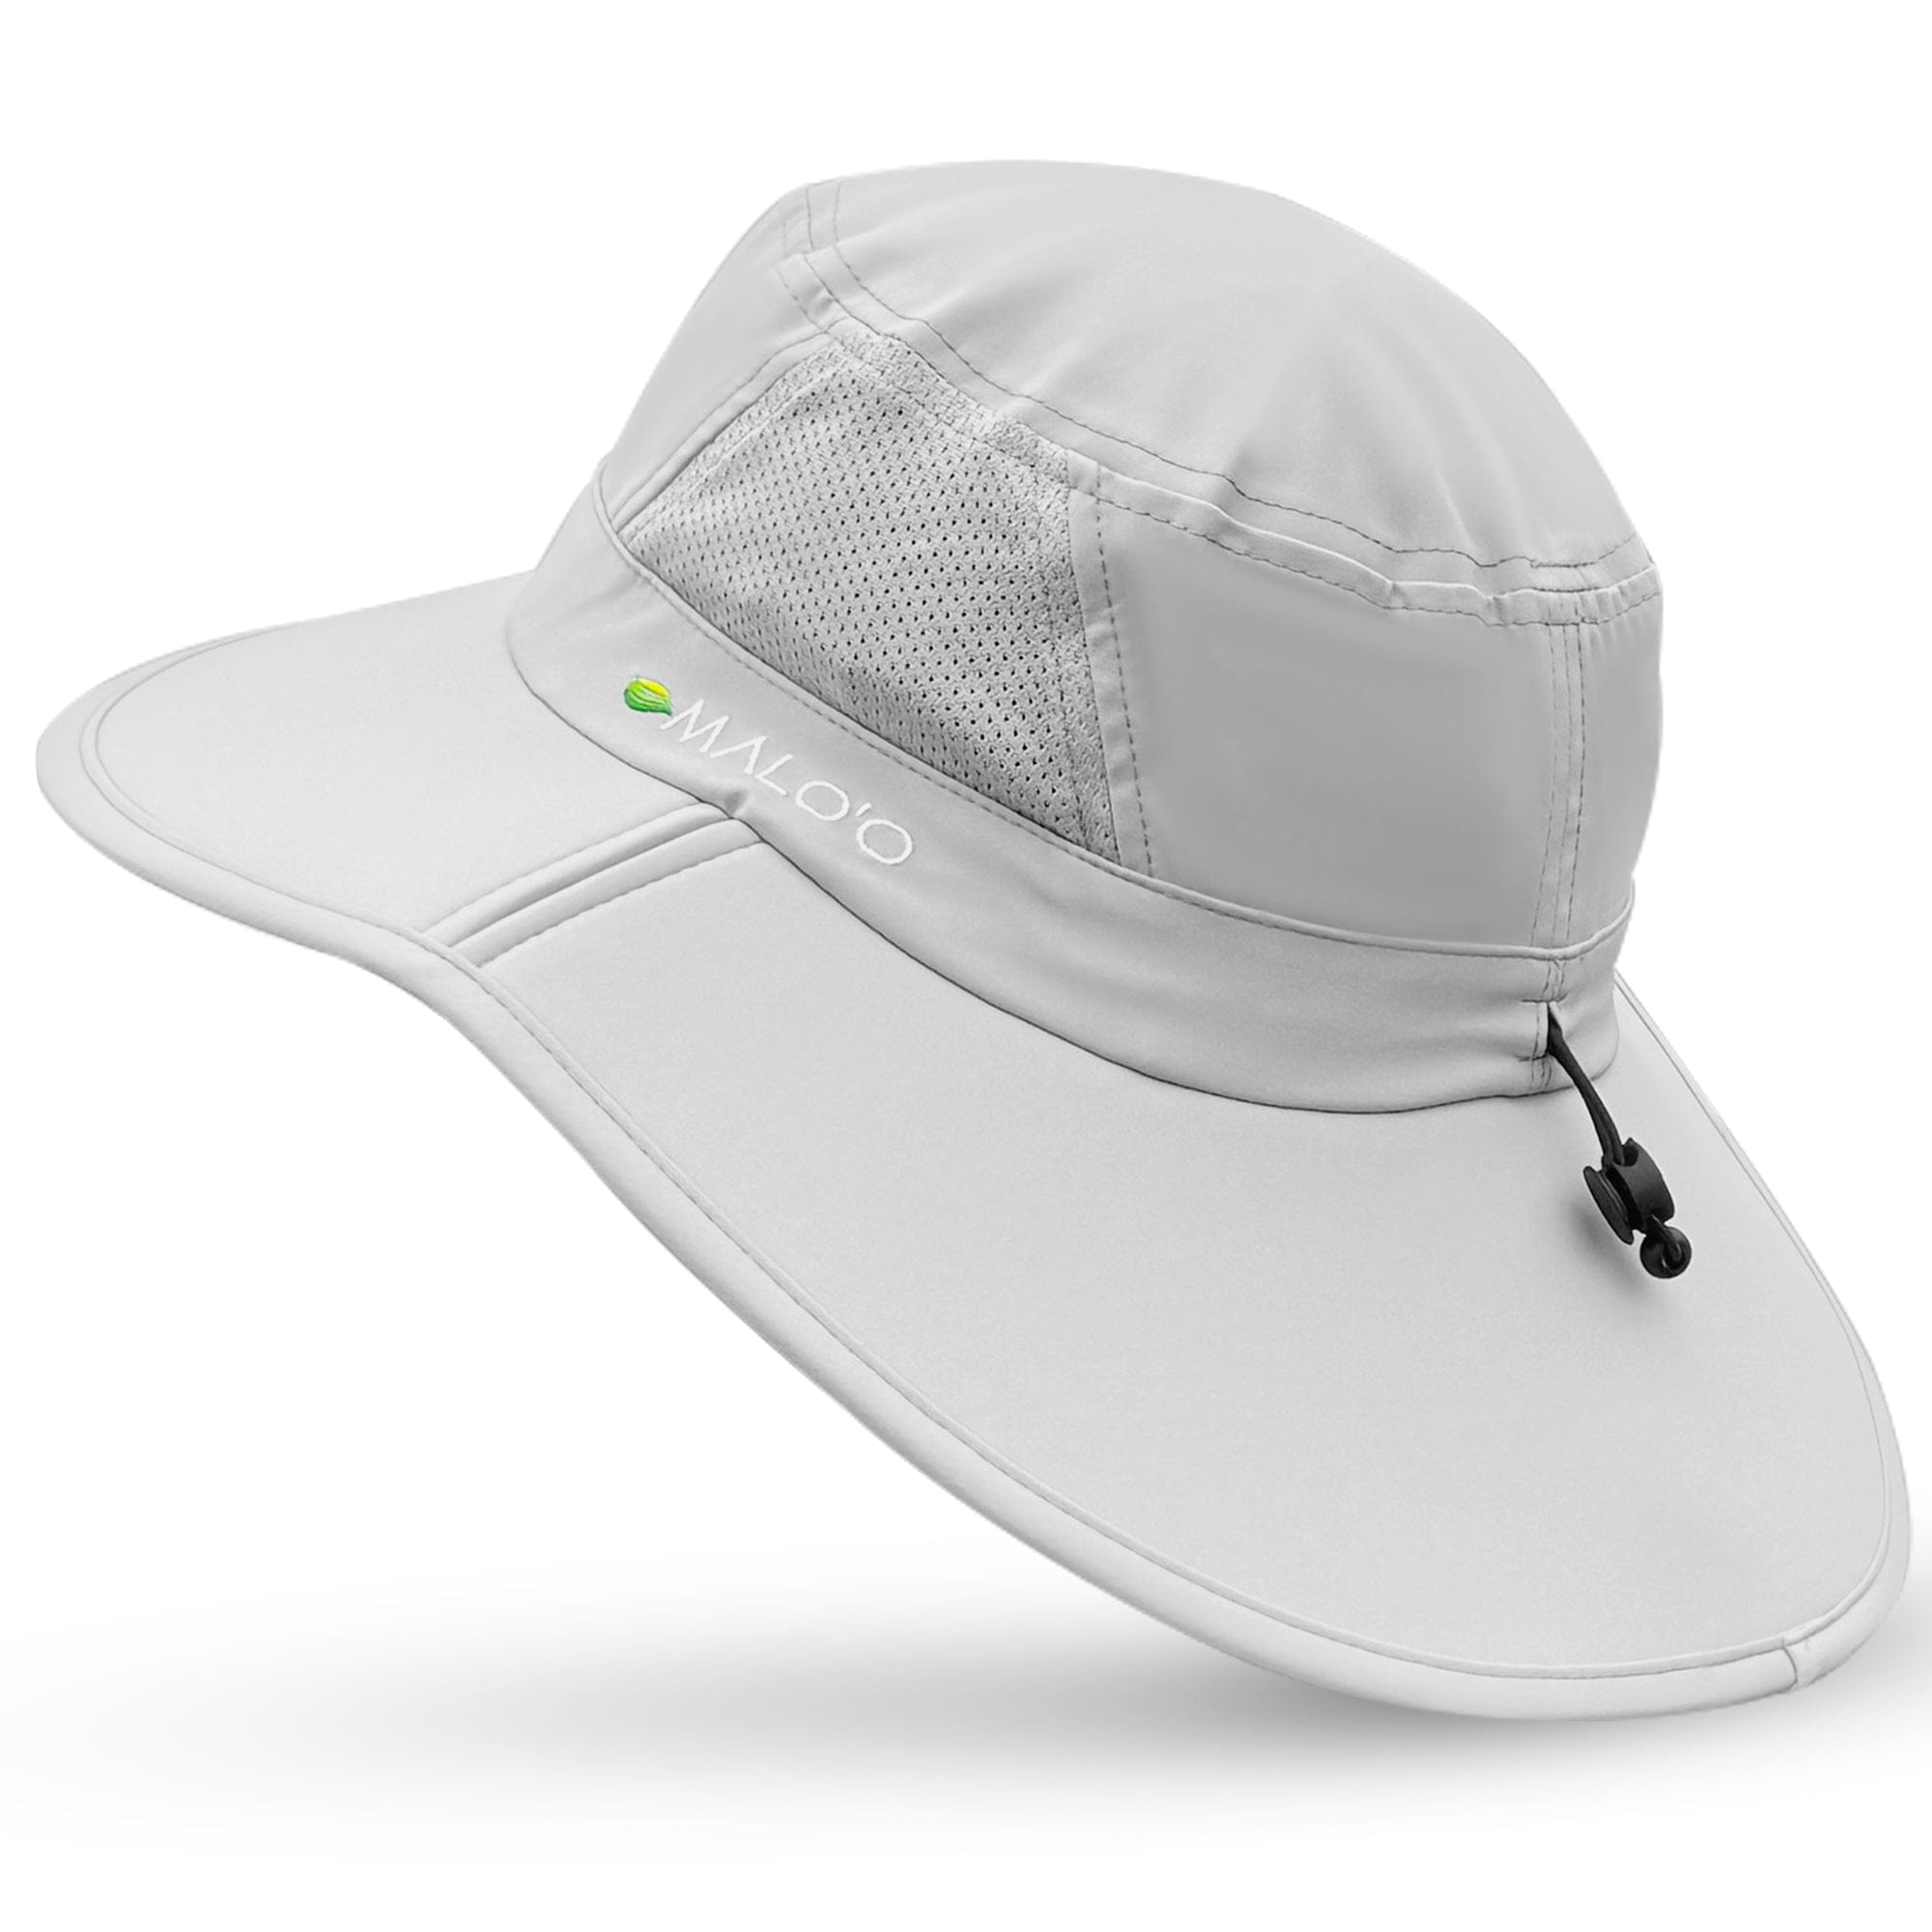 Malo'o Racks Grey / S/M Papale Golf Hat - Sun Protection